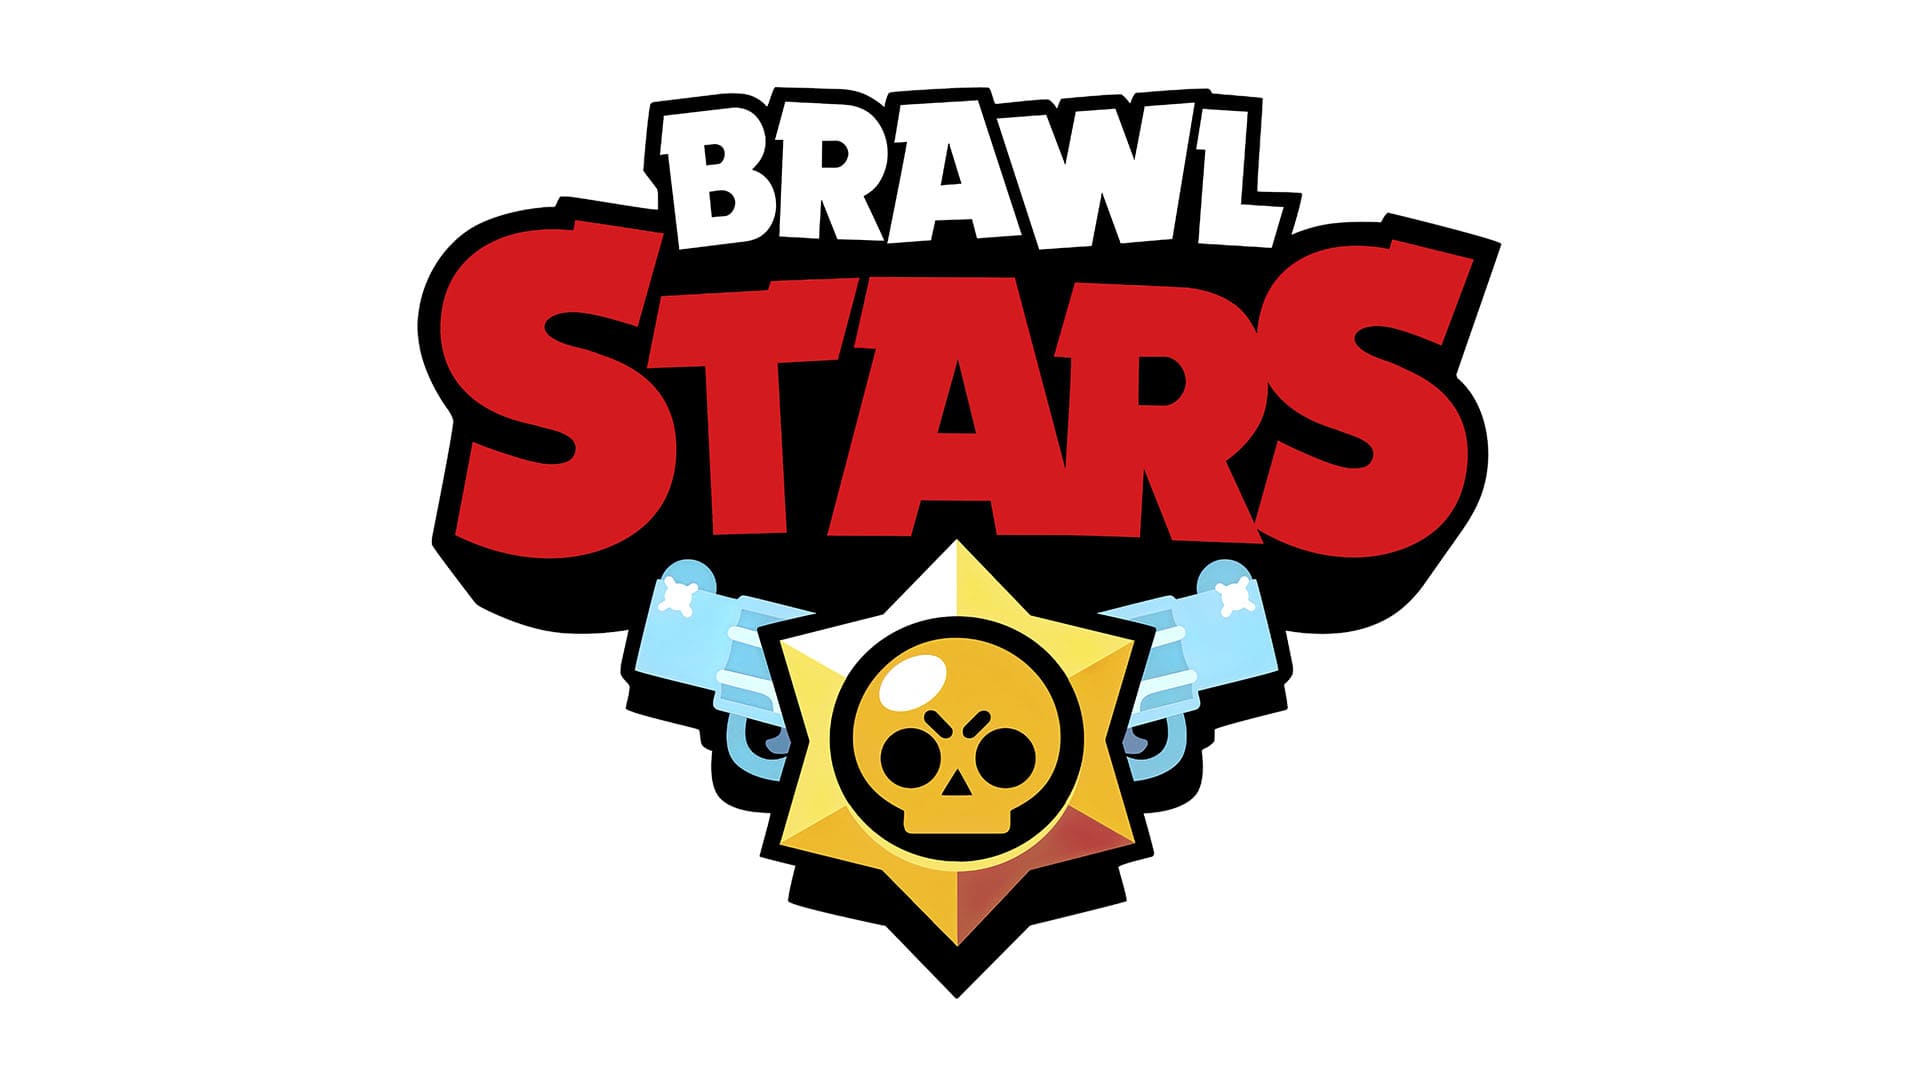 Браво старс без. Brawl Stars логотип. Логотип игры Браво старс. Brawl Stars nadpis. Логотип Brawl Stars на прозрачном фоне.